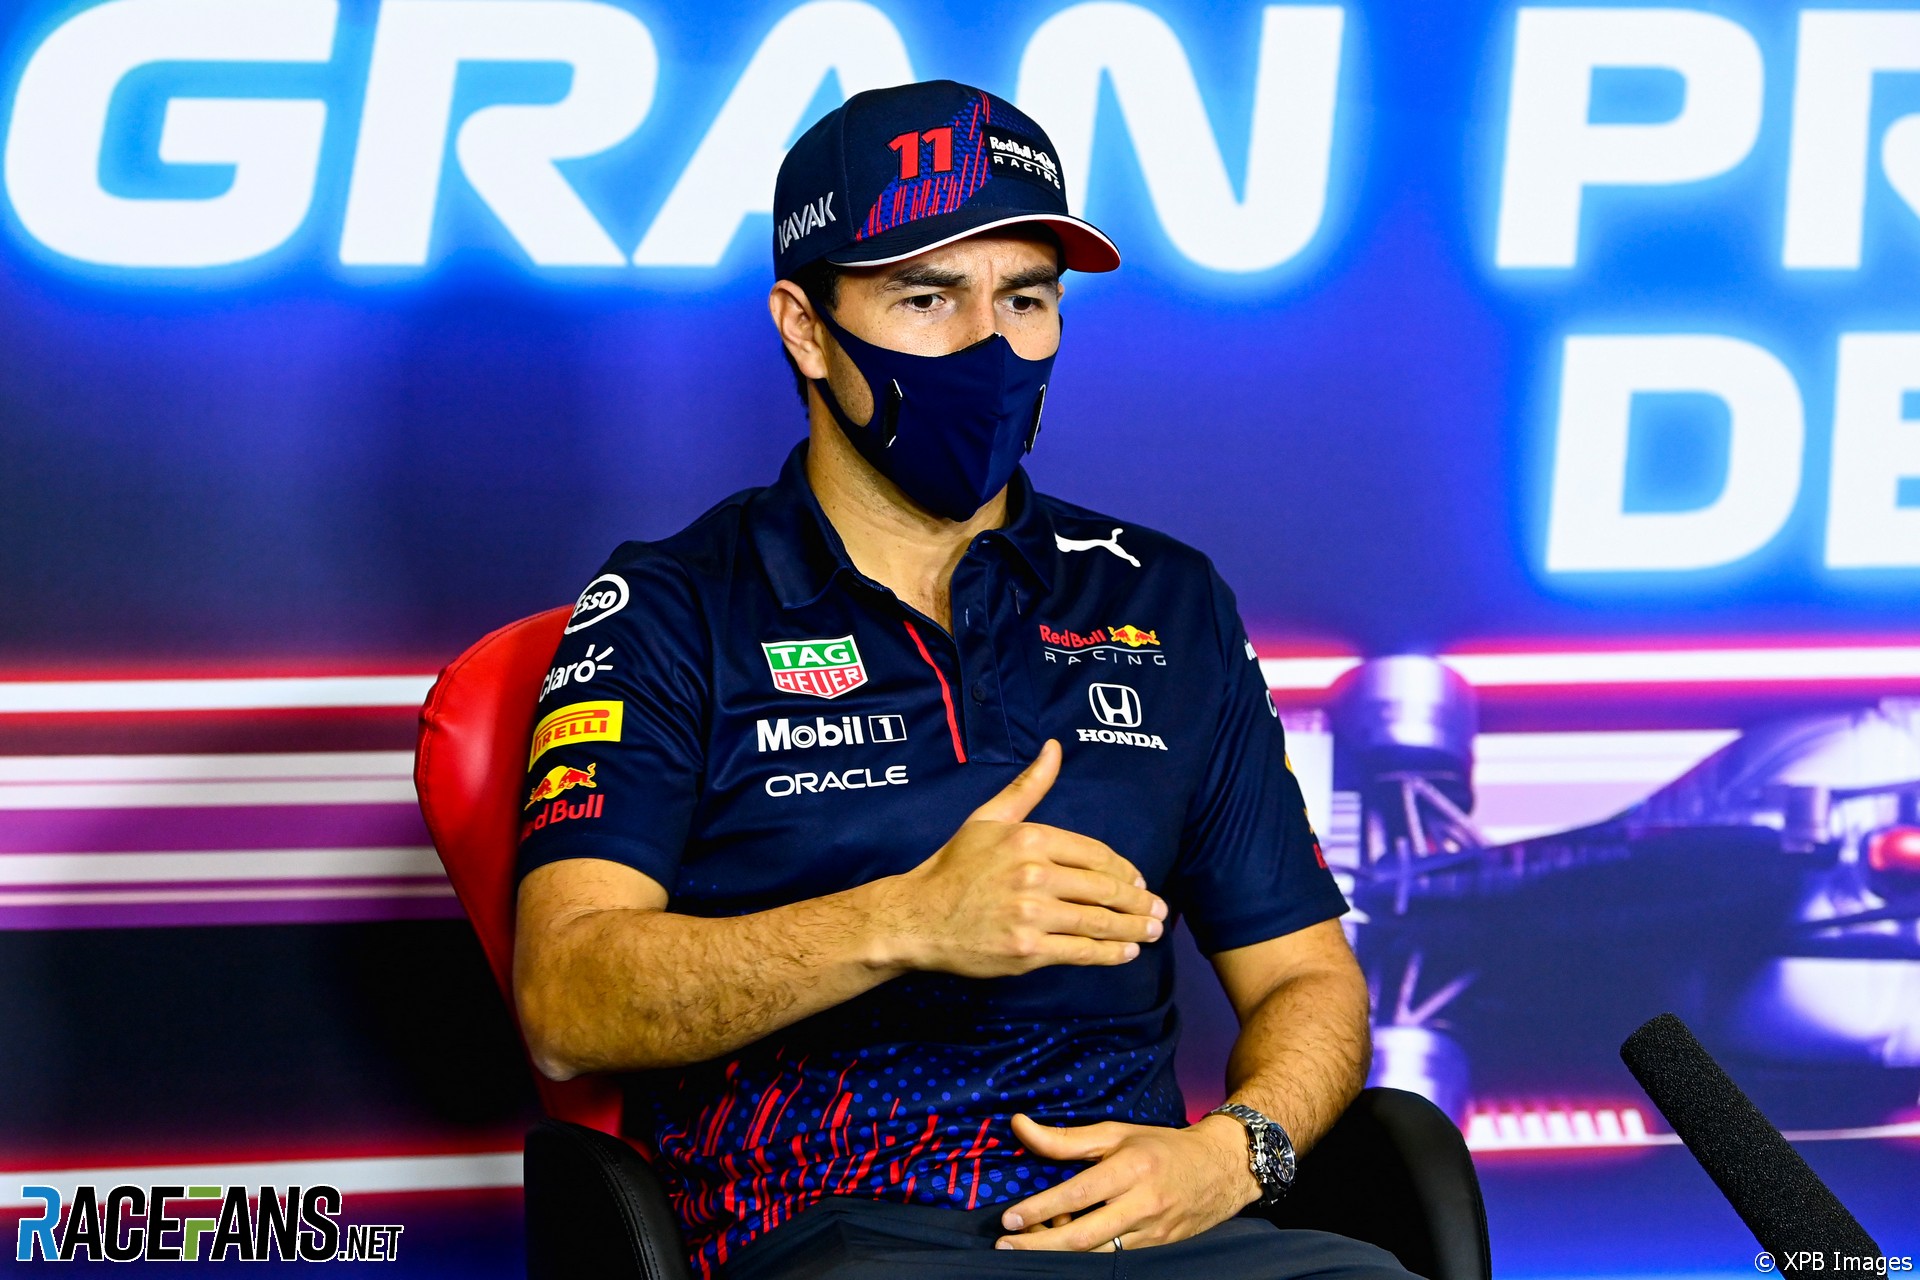 Sergio Perez, Red Bull, Circuit de Catalunya, 2021